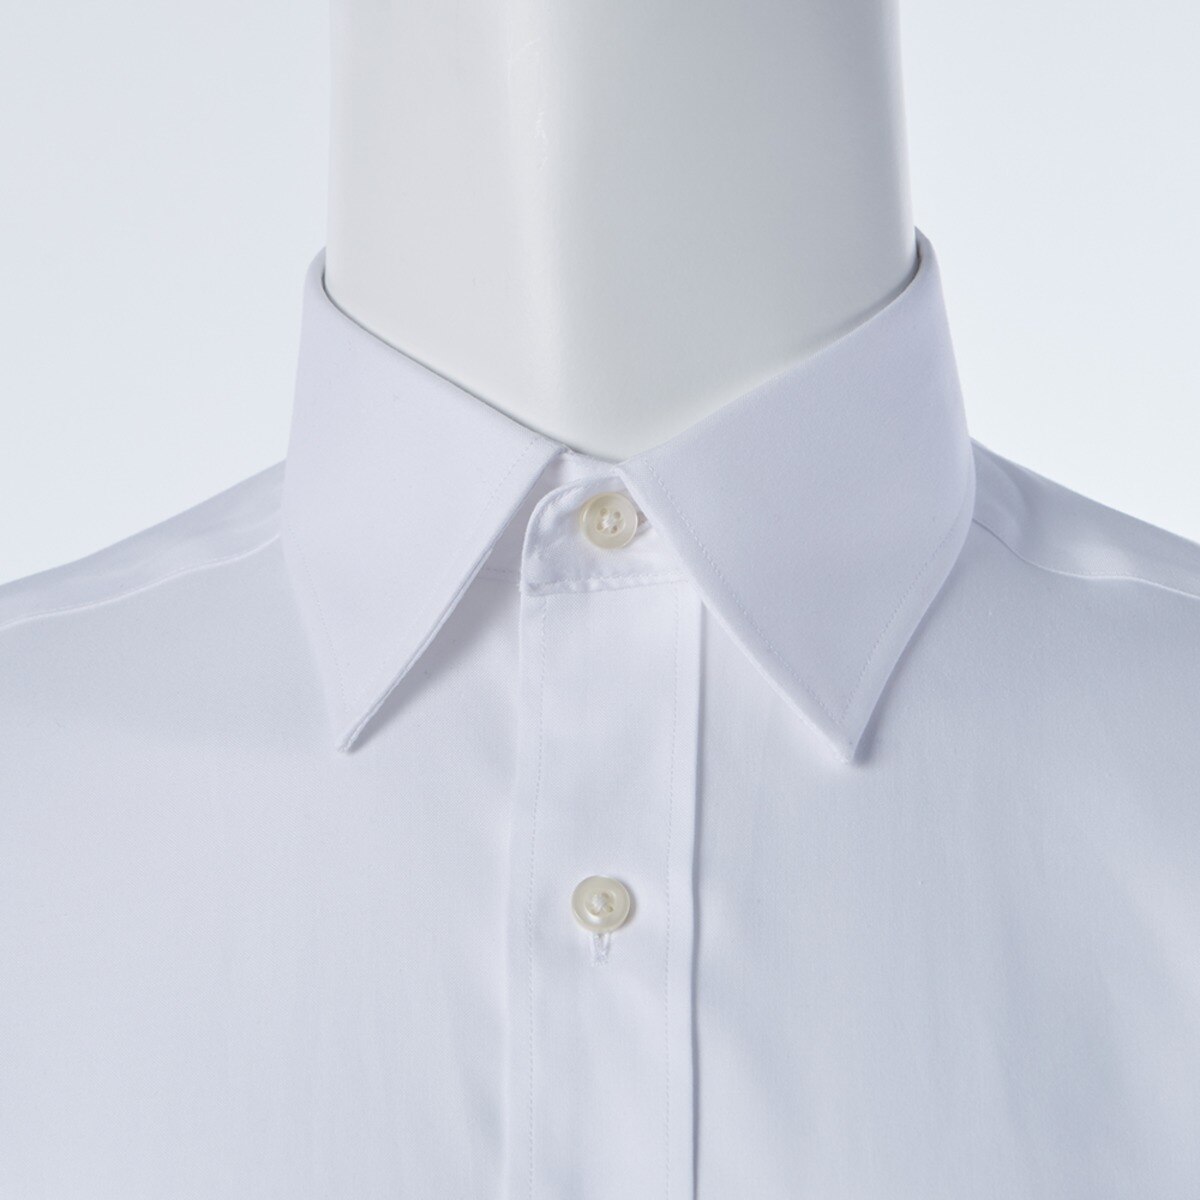 Kirkland Signature 科克蘭 男長袖標準領免燙襯衫 白色 領圍 15吋 X 袖長 32/33吋